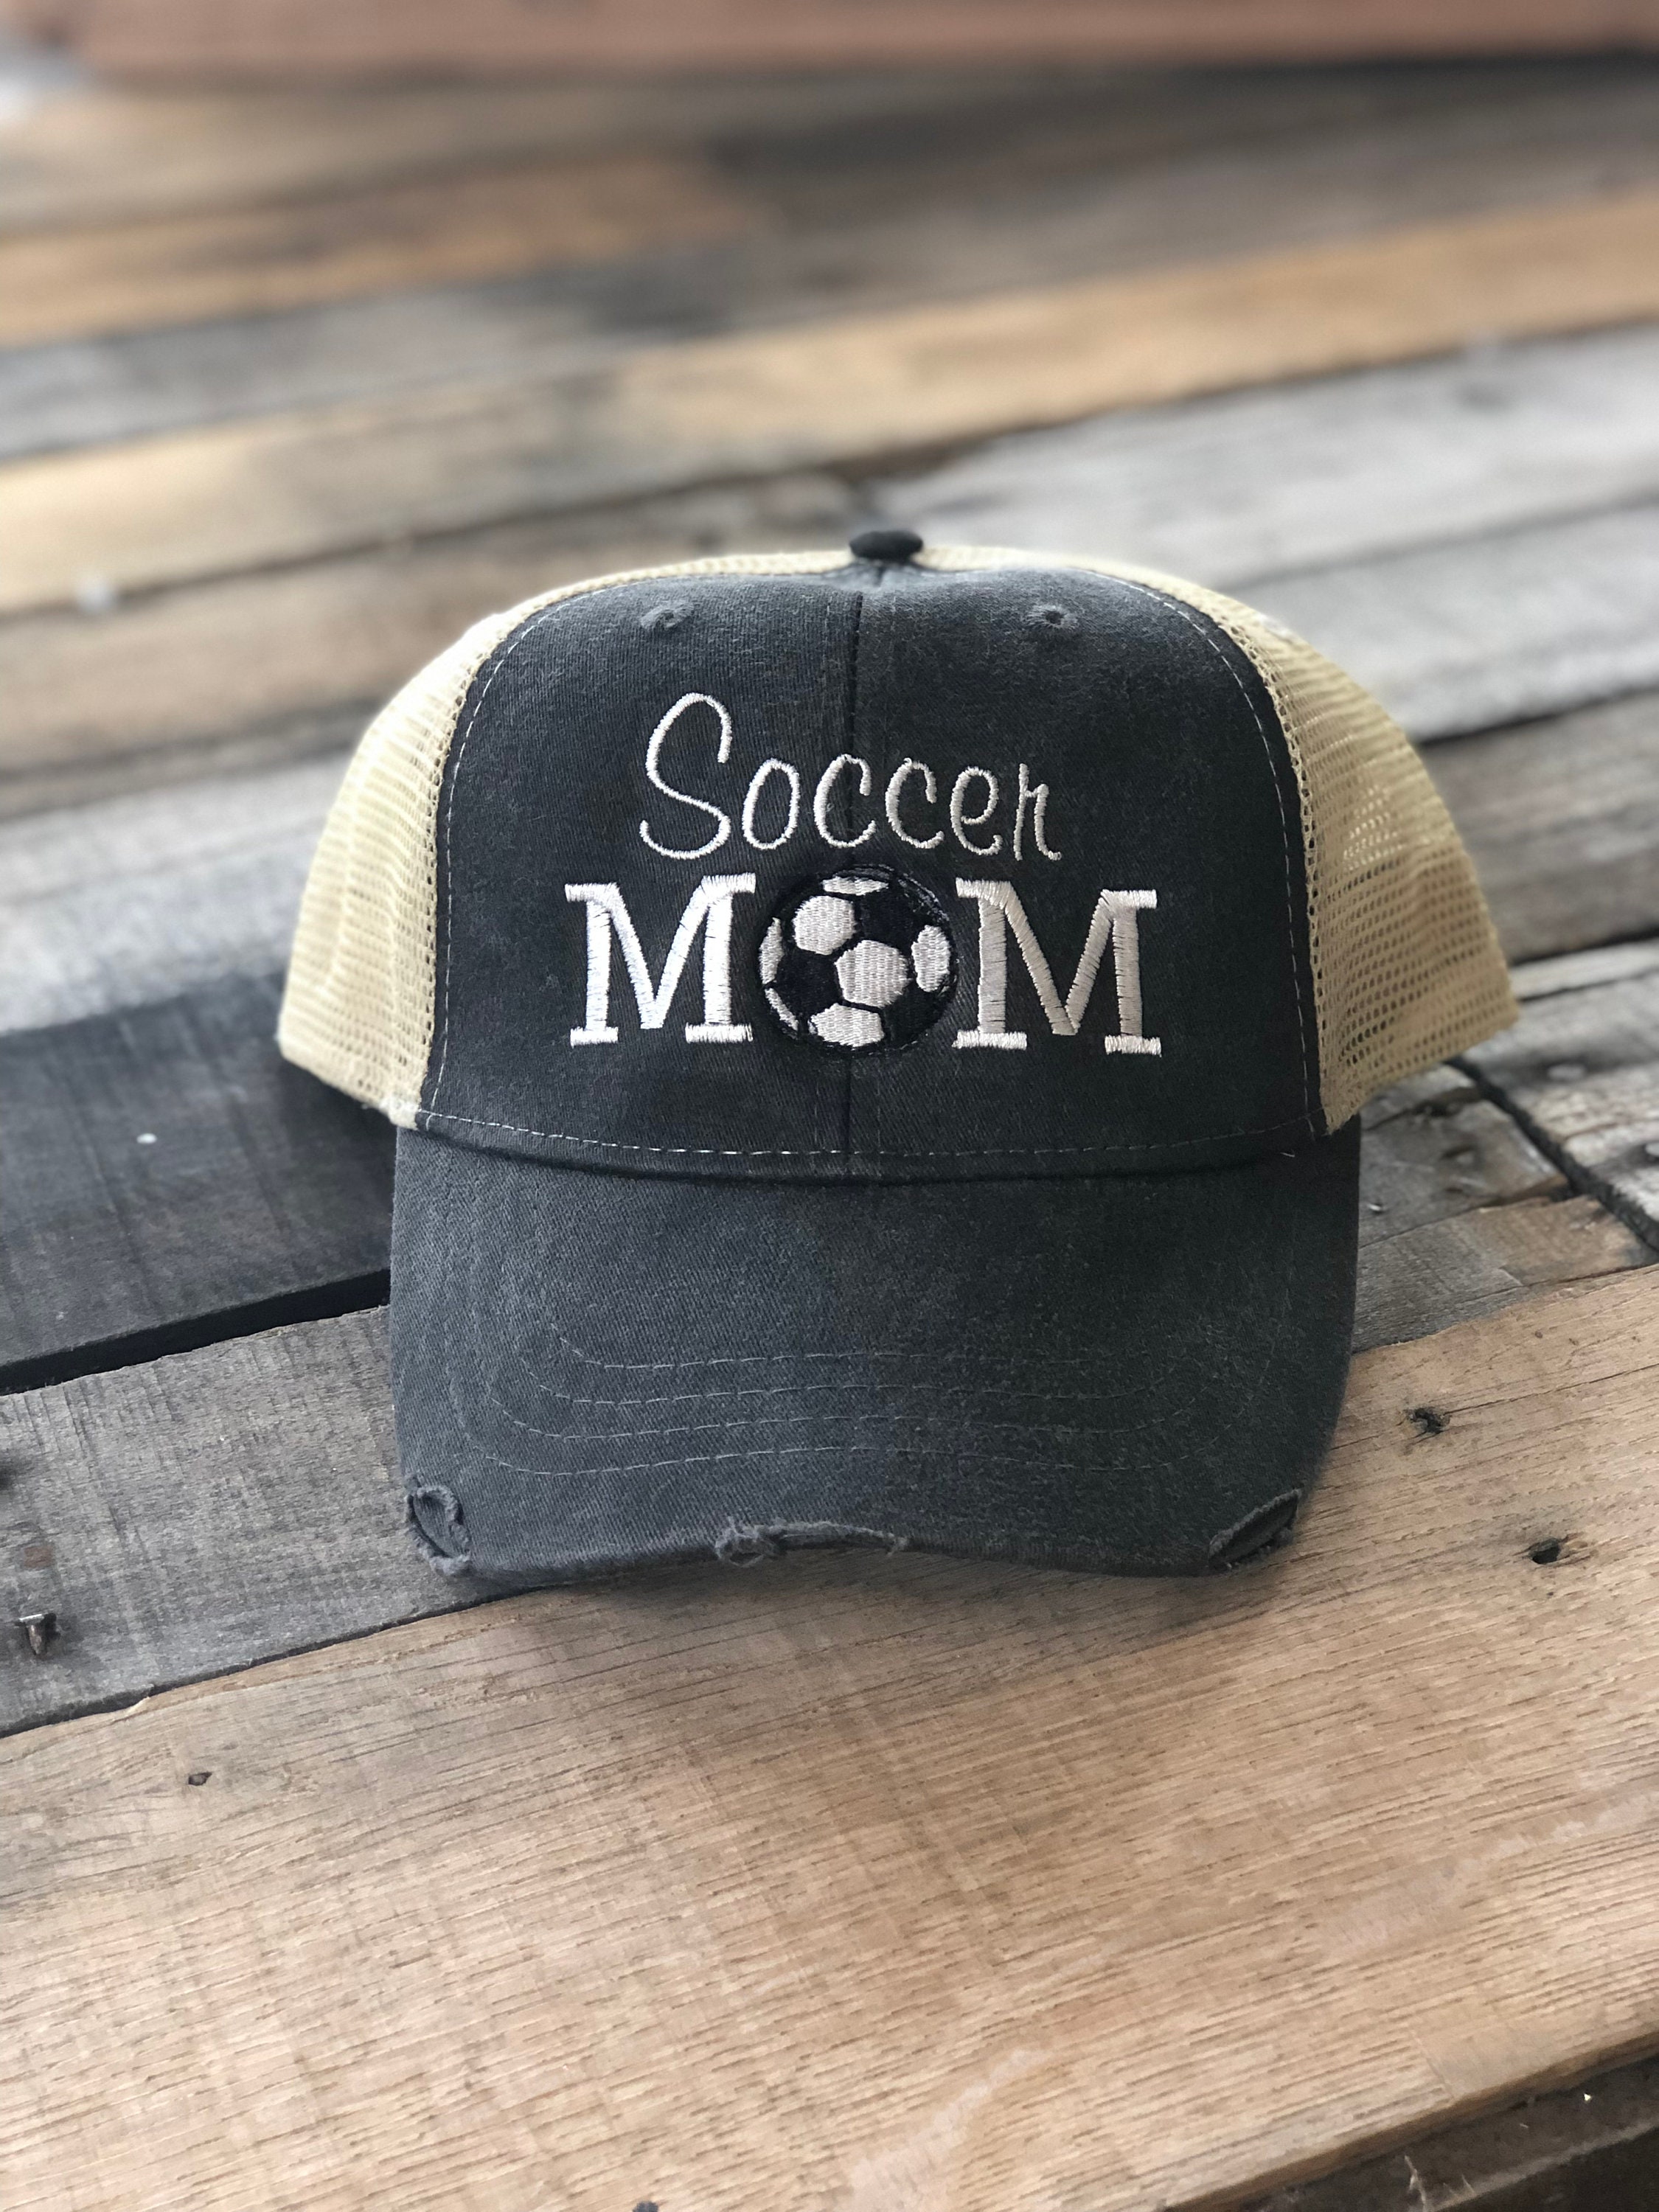 Soccer Mom Hat Black | Etsy